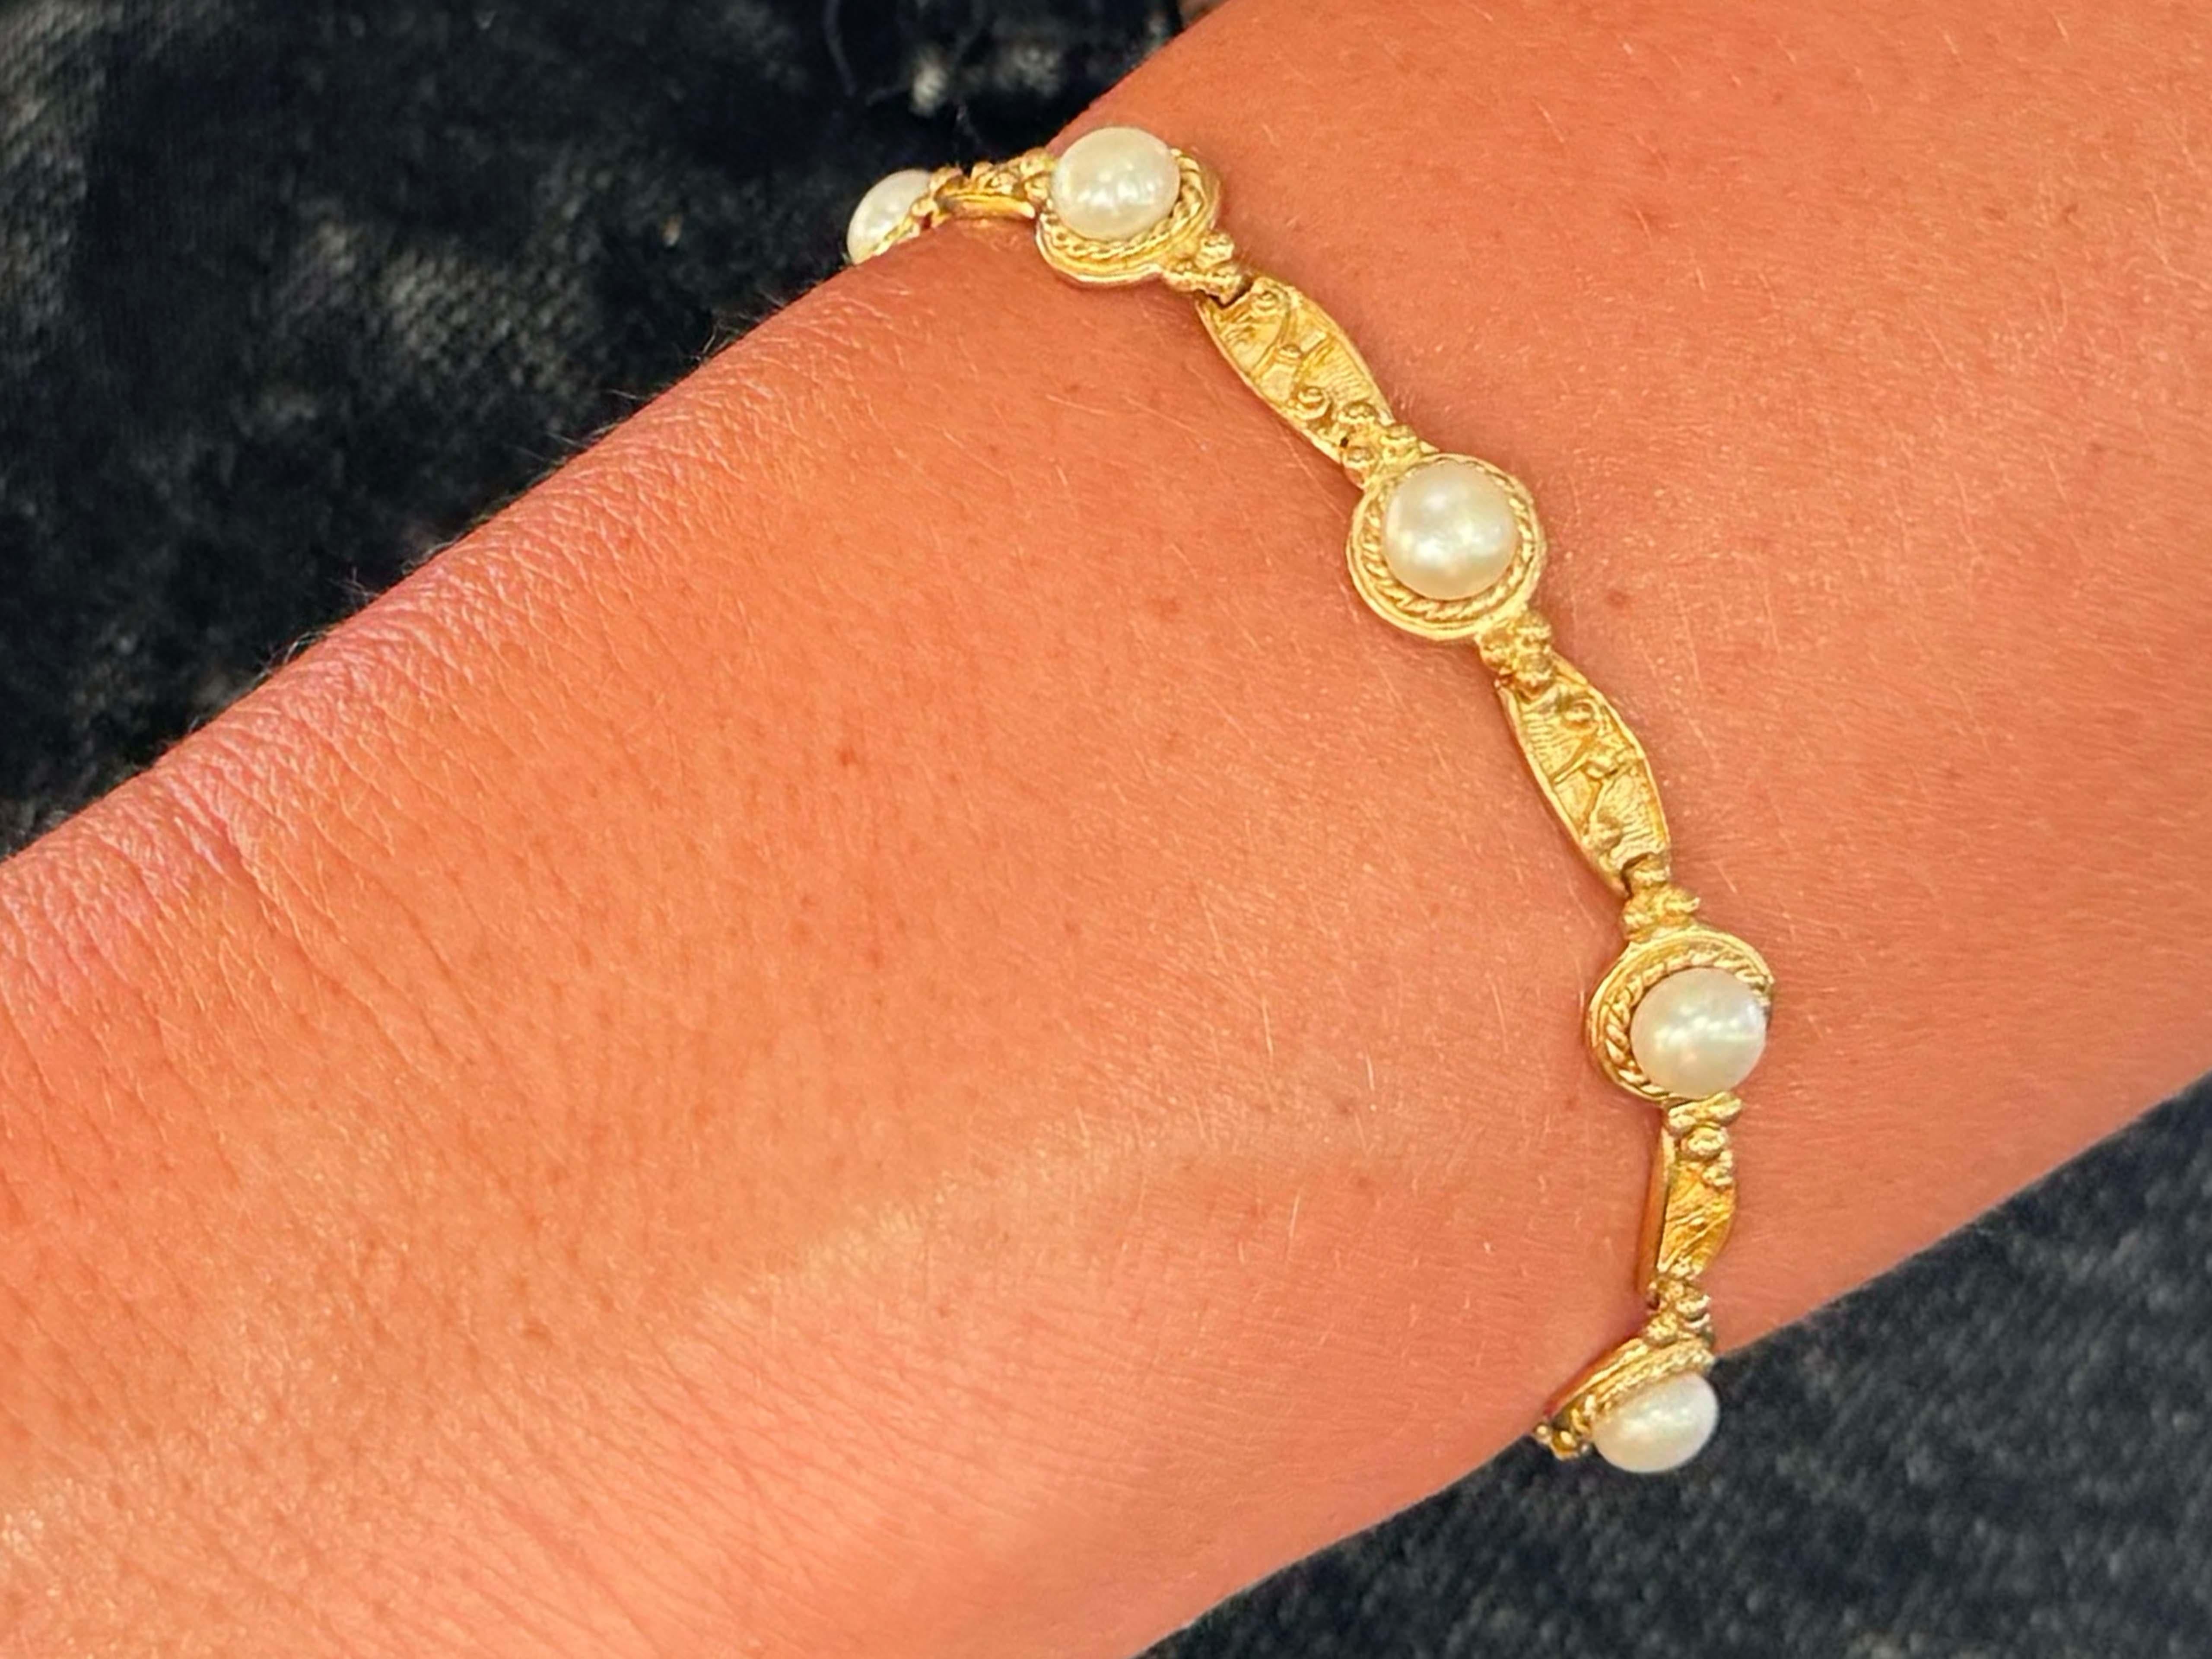 Bracelet Specifications:

Metal: 14k Yellow Gold
​
​Pearl Count: 7 akoya pearls
​
​Pearl Width: 5.5 mm

Bracelet Length: ~6.75